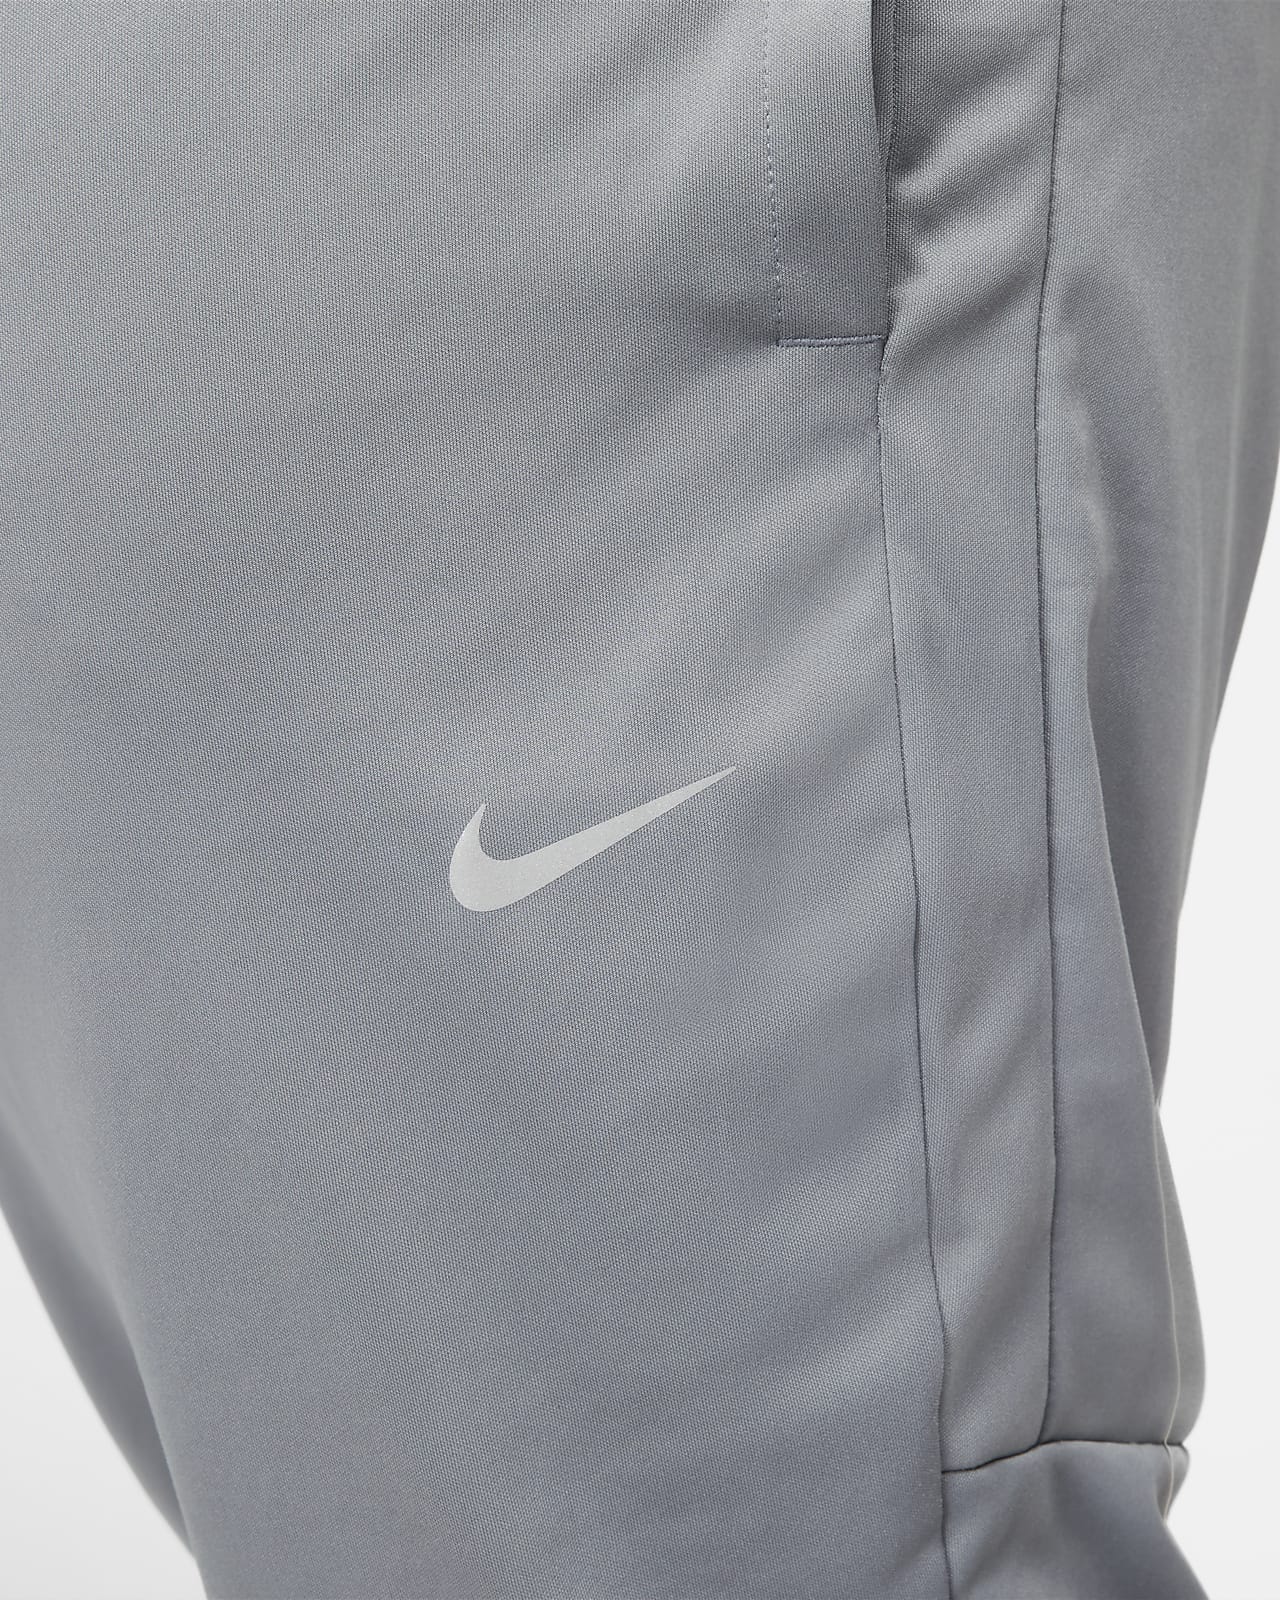 Nike Mens Sport Pants, Black/White/White/White, X-Small US : Amazon.com.au:  Clothing, Shoes & Accessories